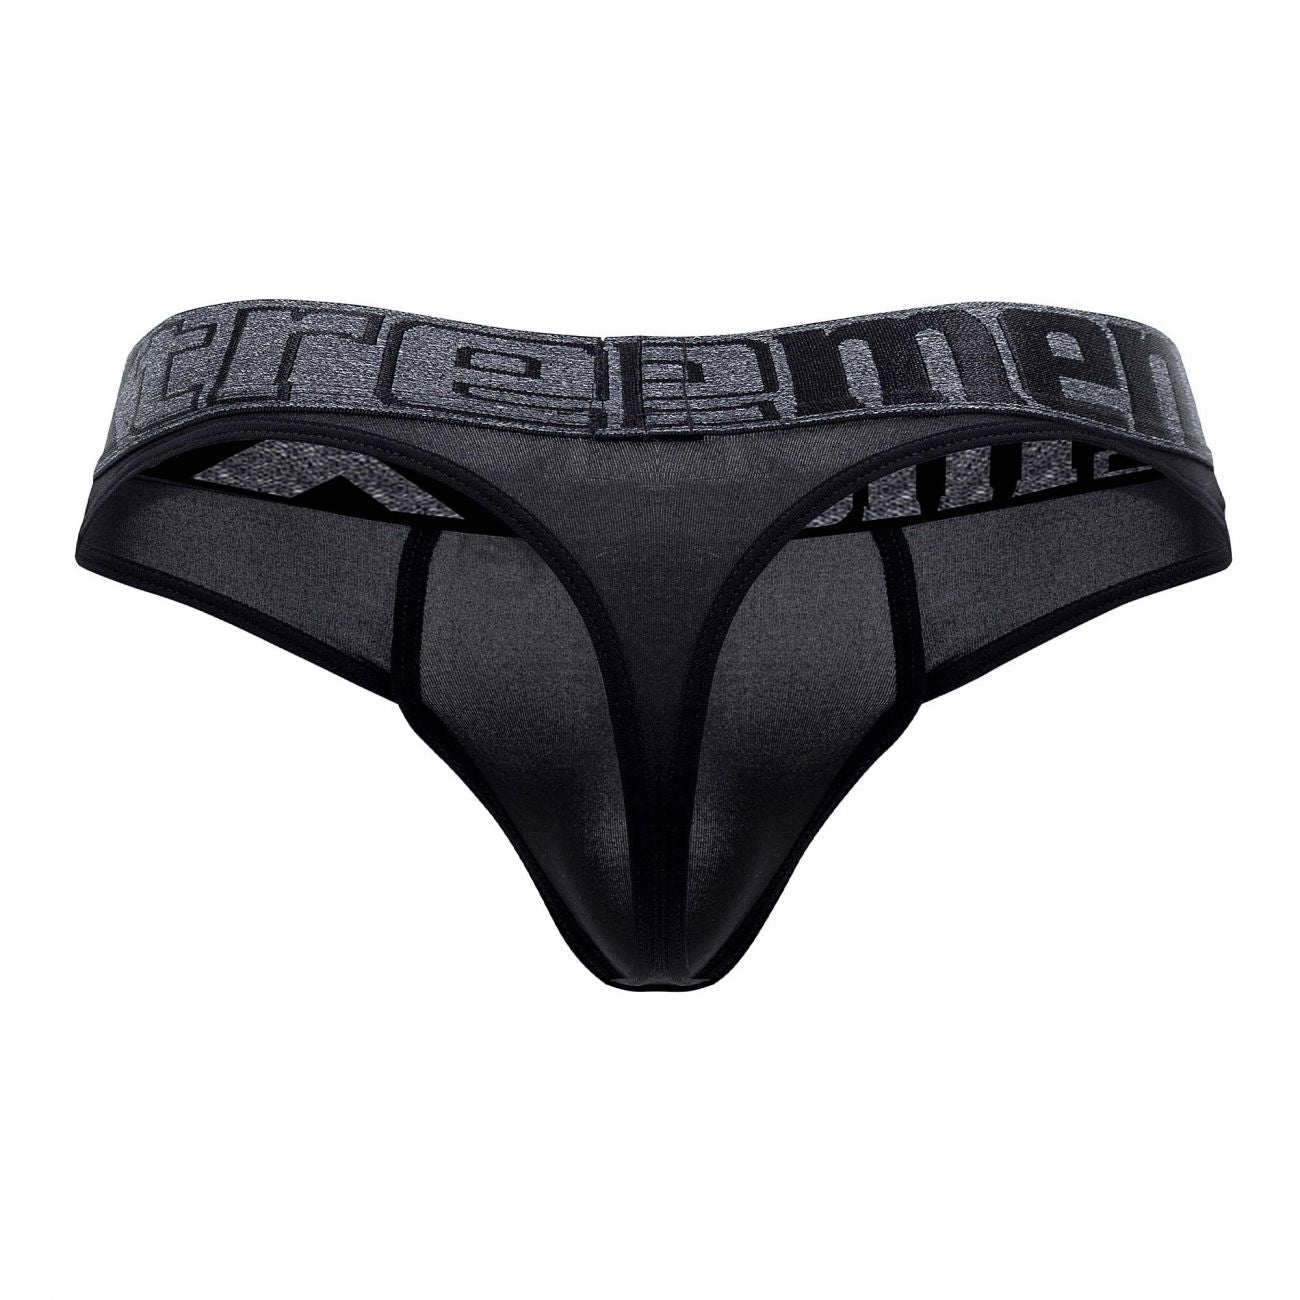 Xtremen 91101X Microfiber Thongs Black Plus Sizes